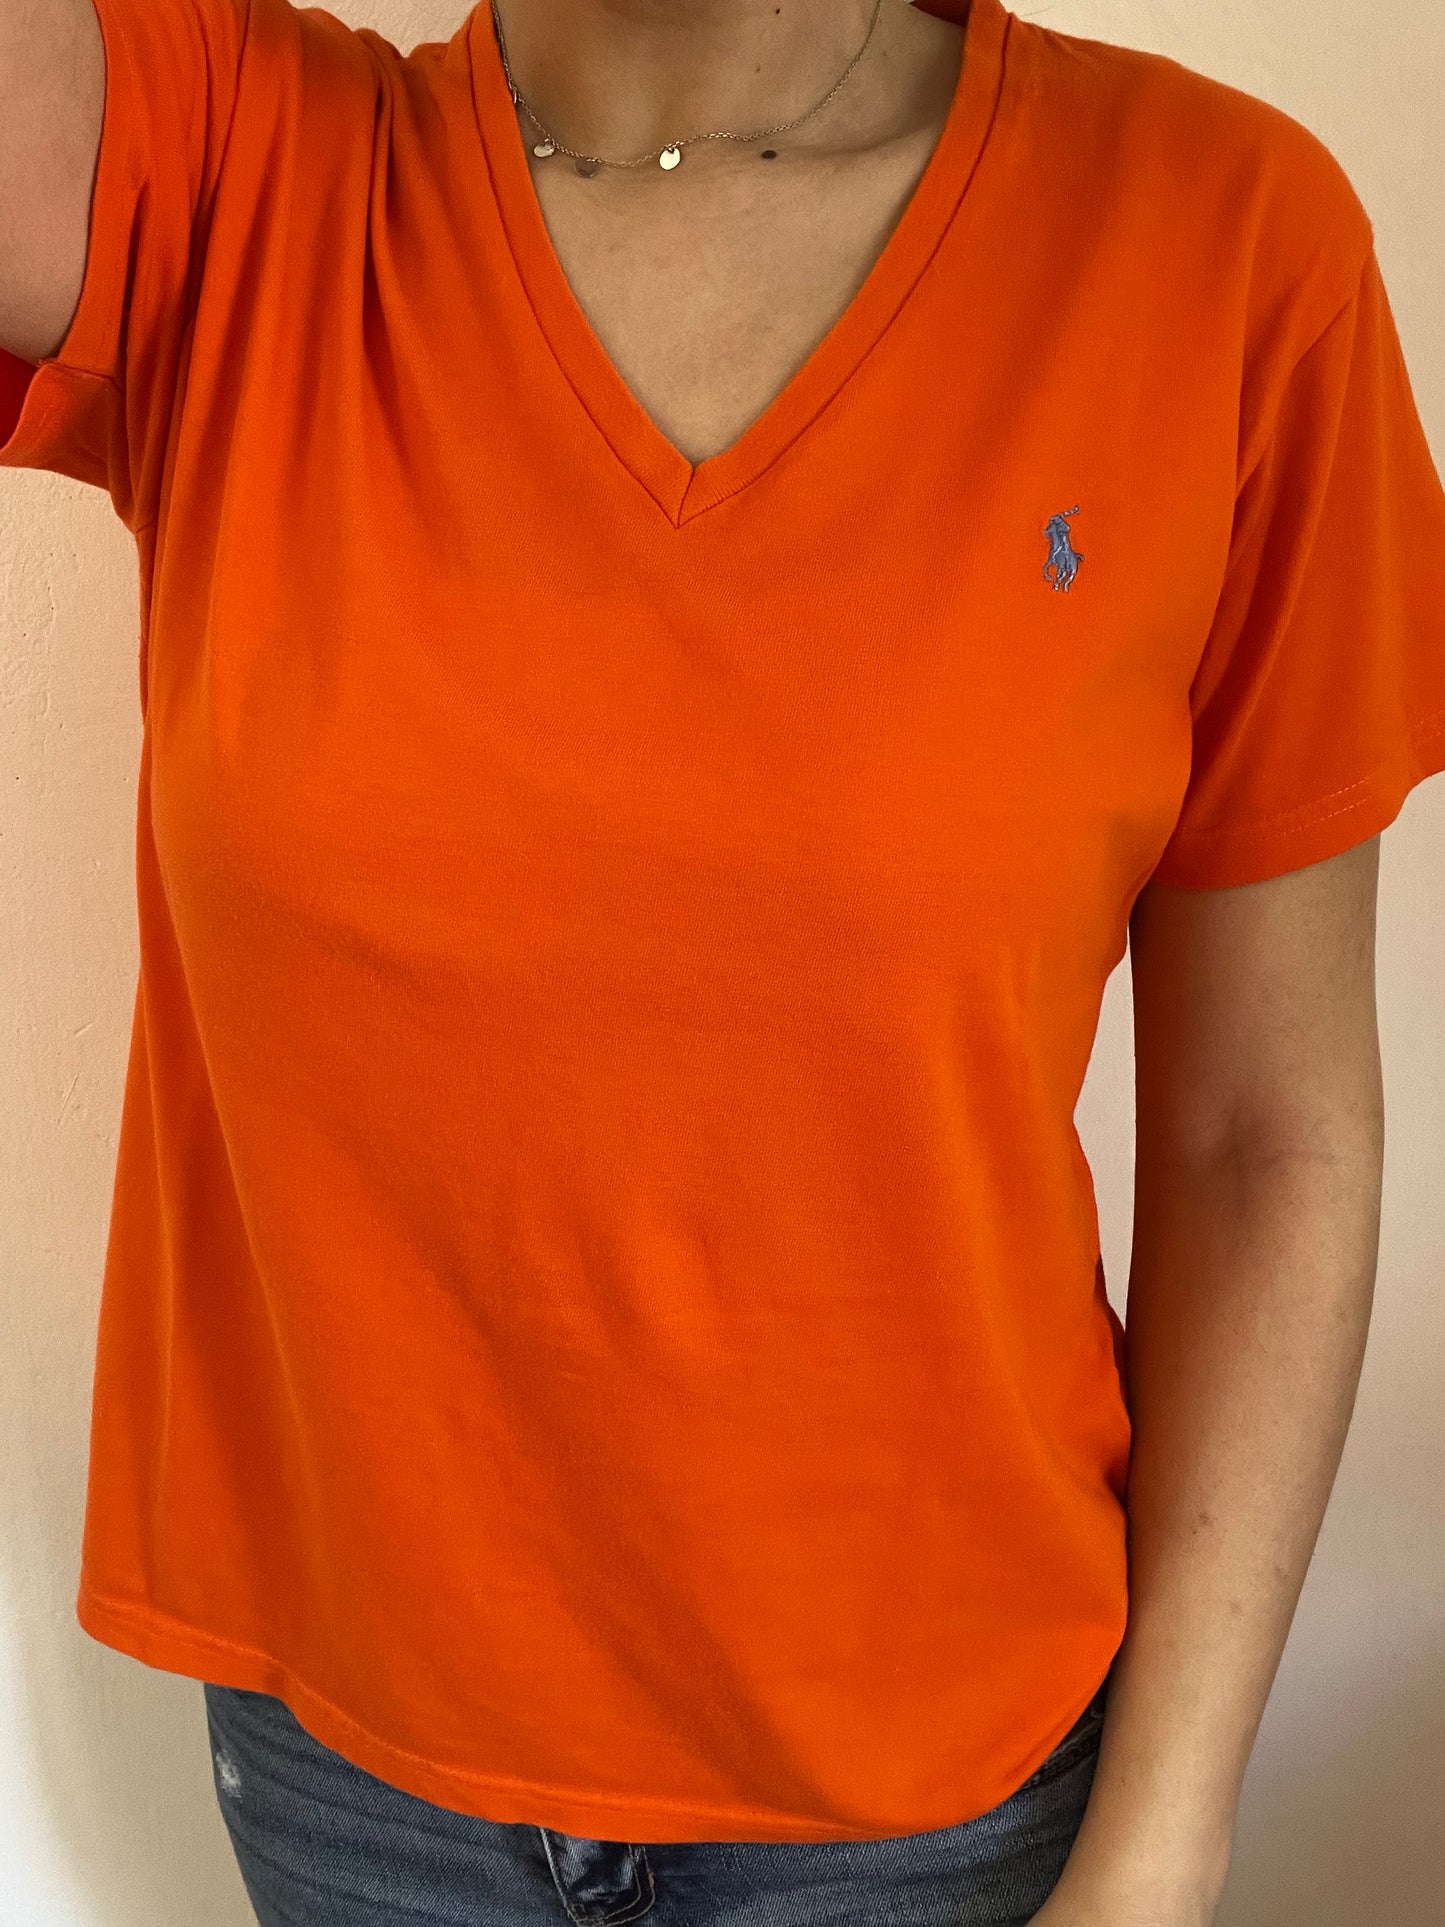 T-Shirt Ralph Lauren arancione taglia L